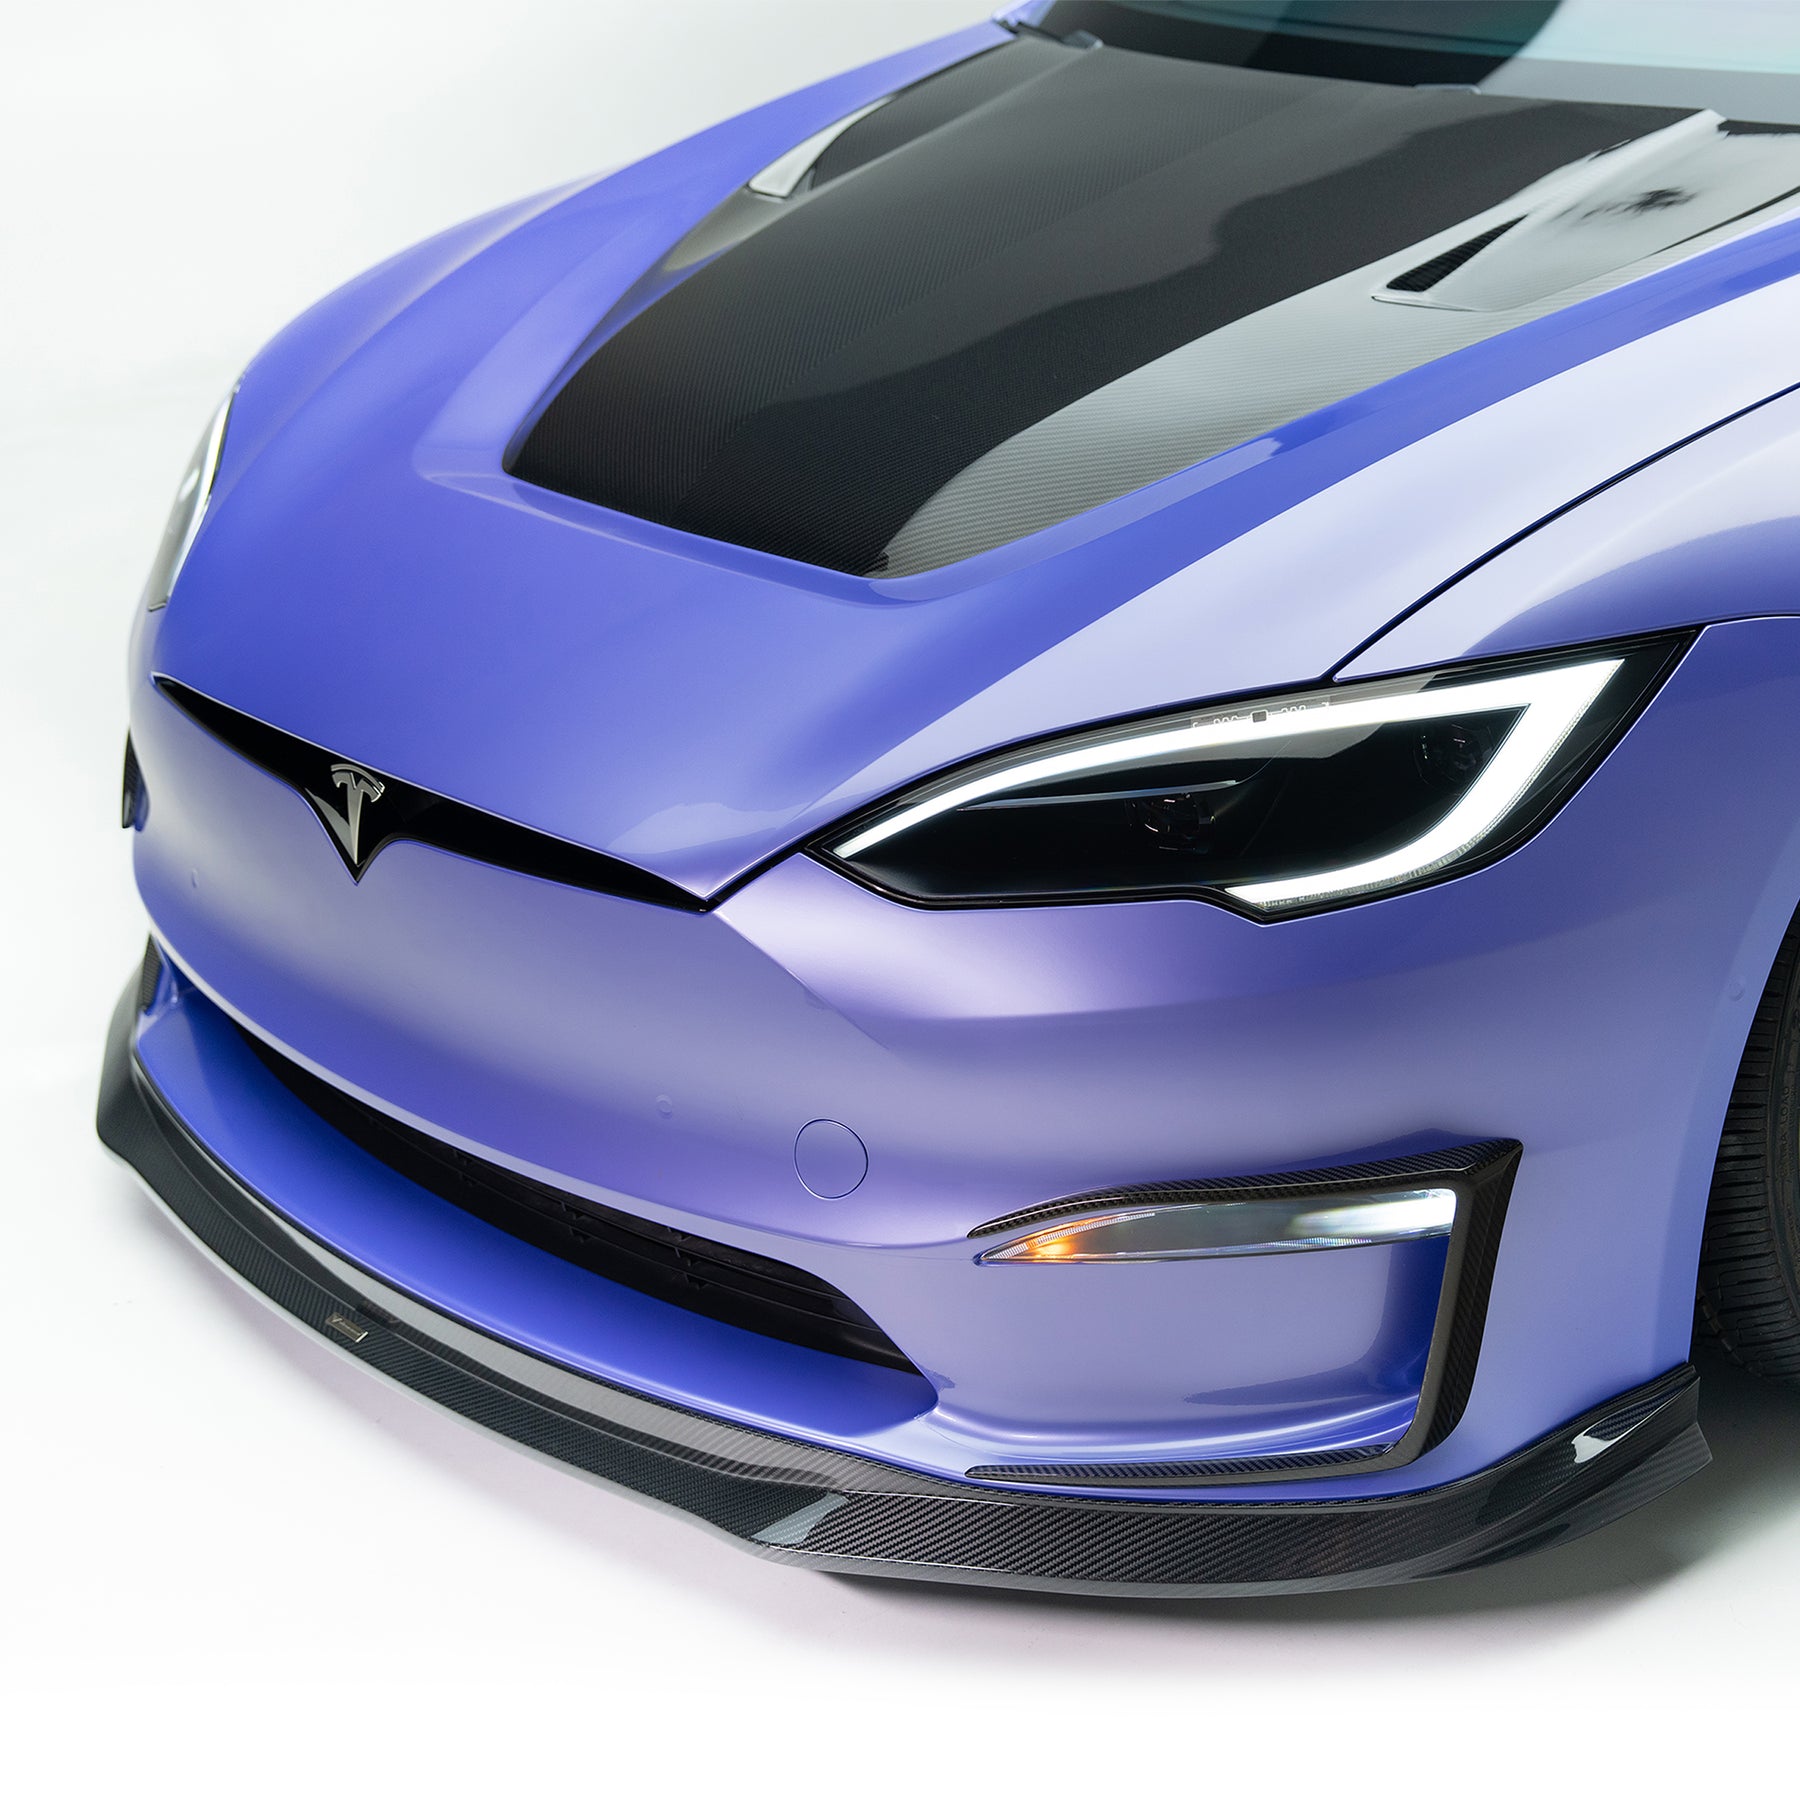 VRS Tesla Model S Plaid Aero Front Spoiler Carbon Fiber PP 2X2